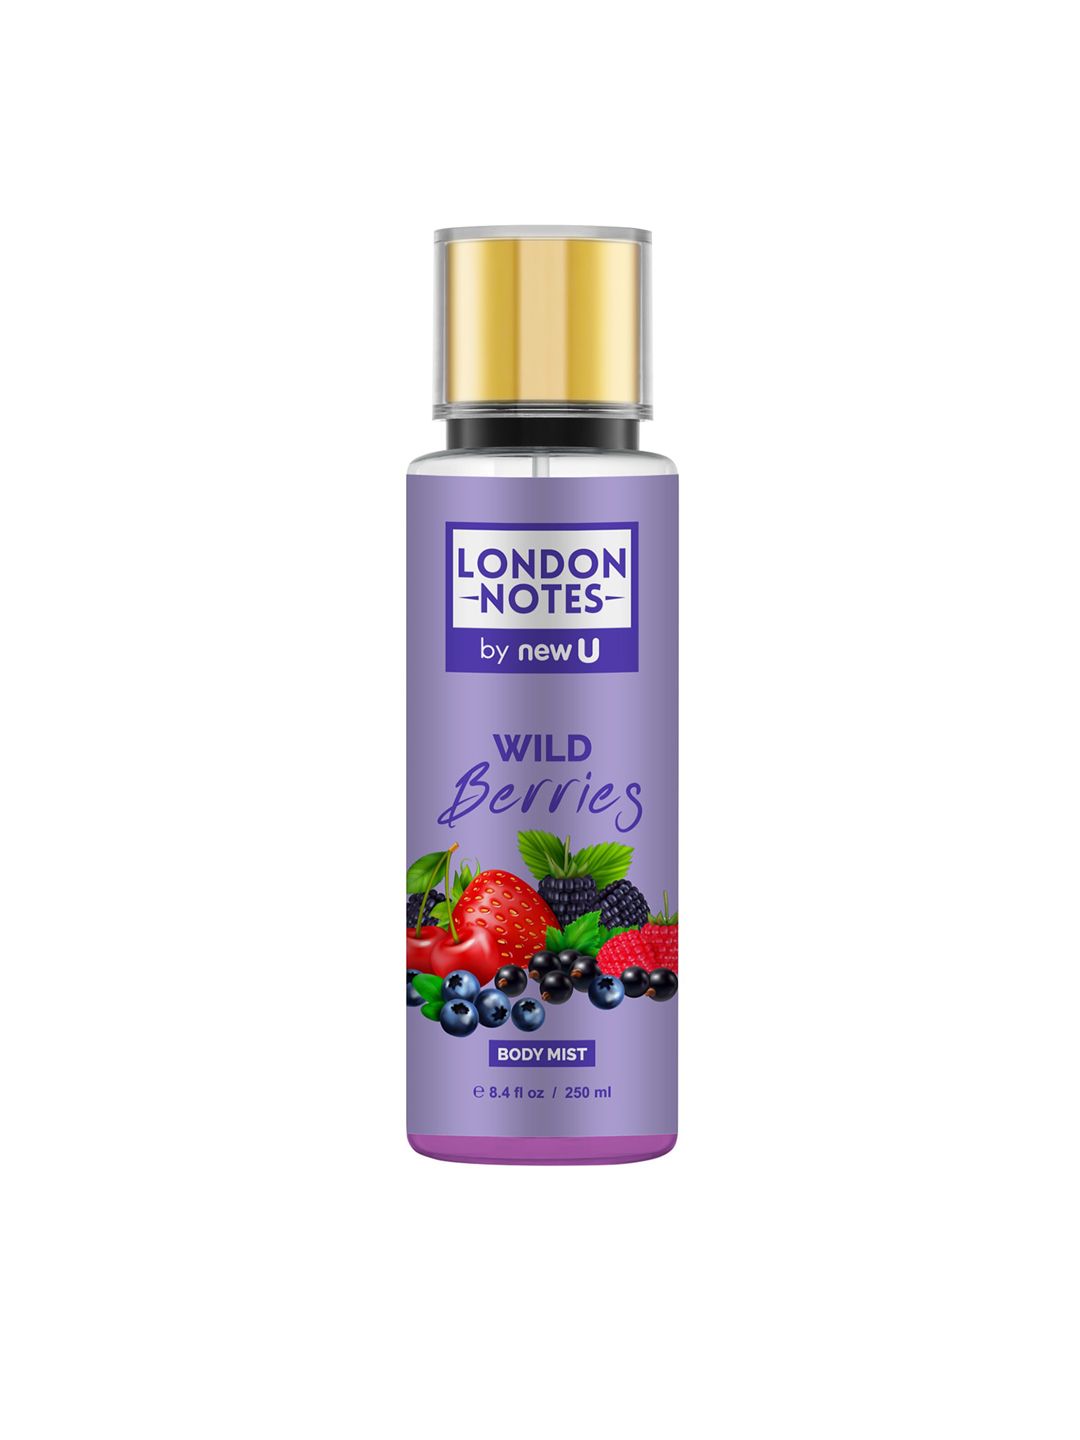 NewU Men London Notes Wild Berries Body Mist 250 ml Price in India